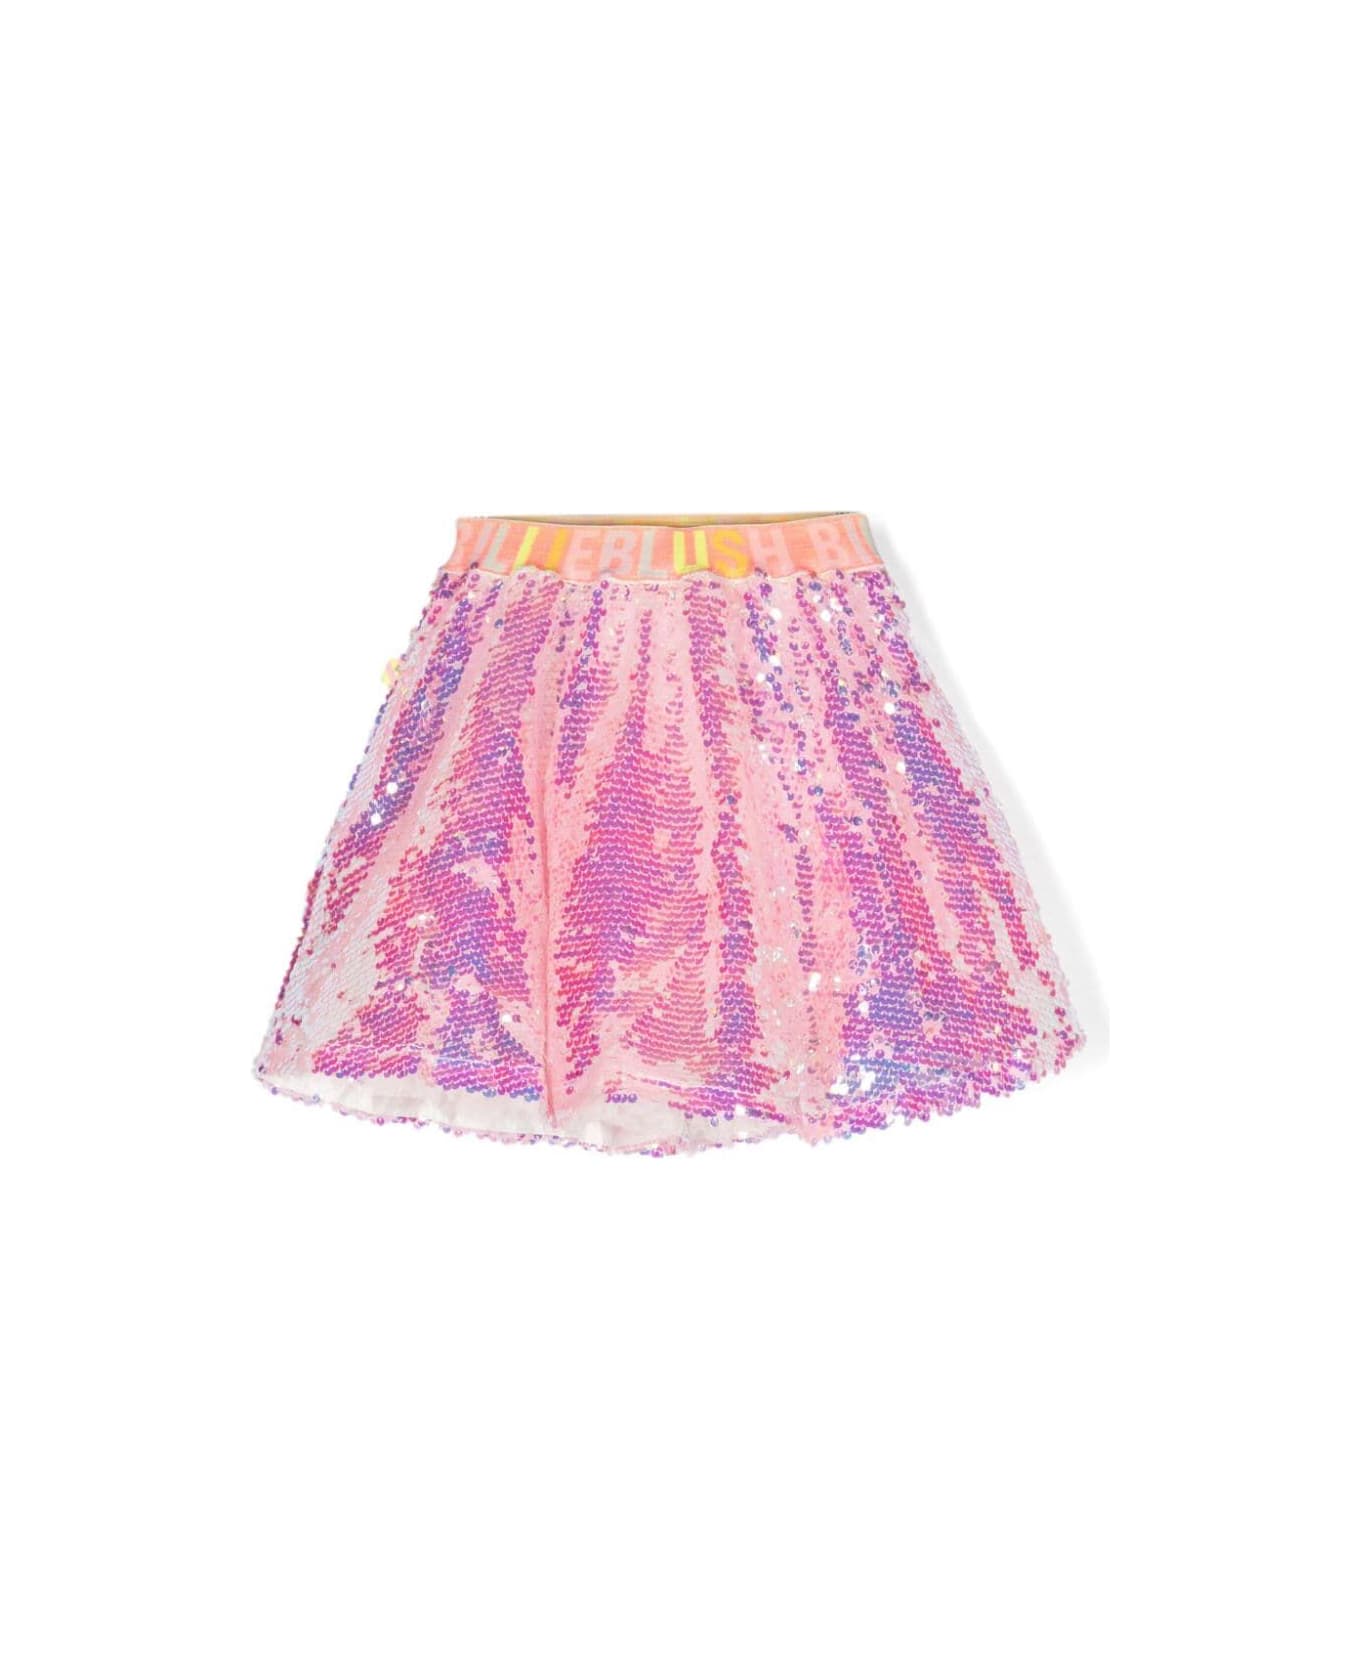 Billieblush Petticoat - Pink